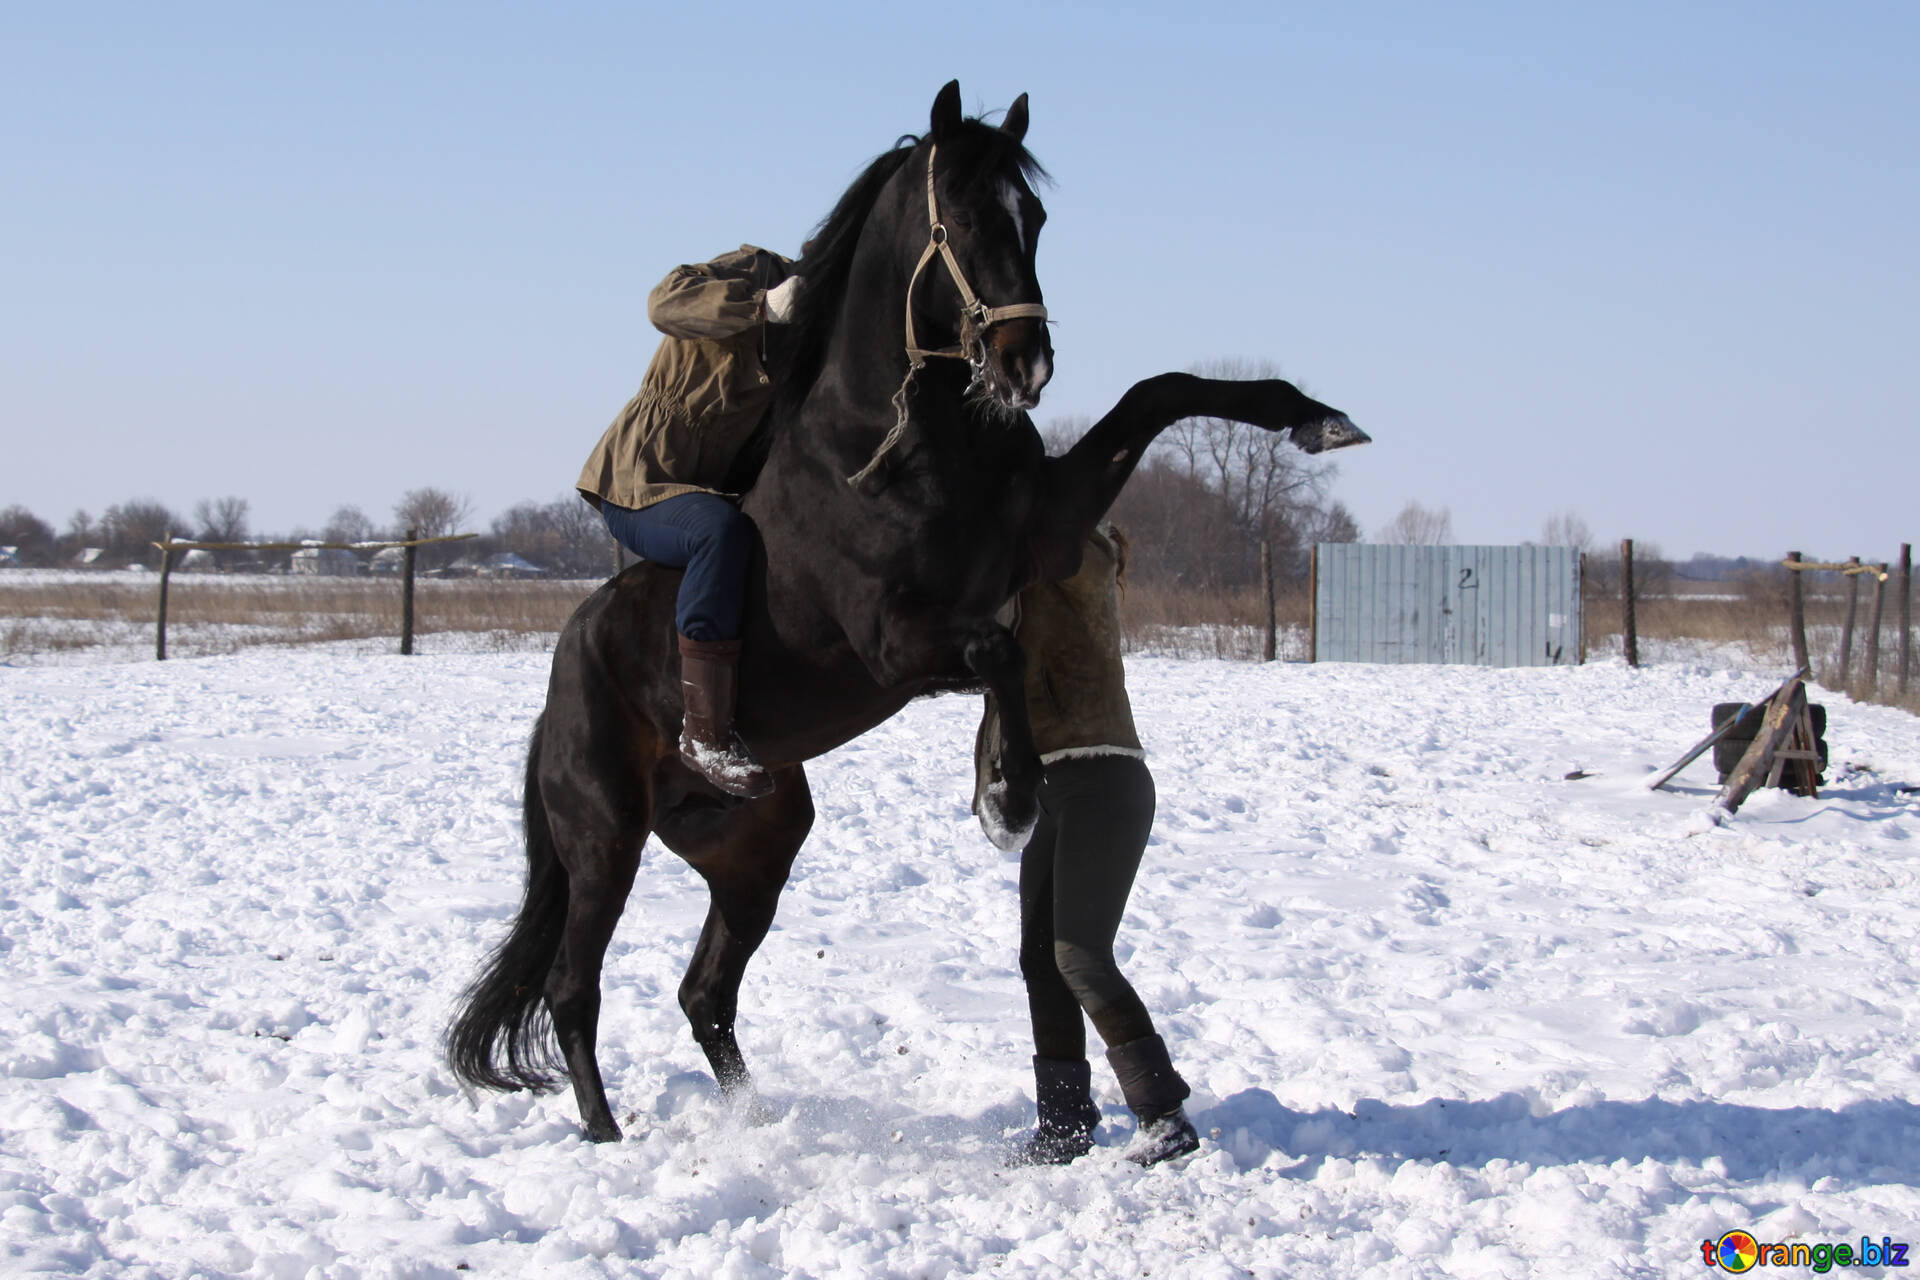 Black stallion rome major stuffs tighty